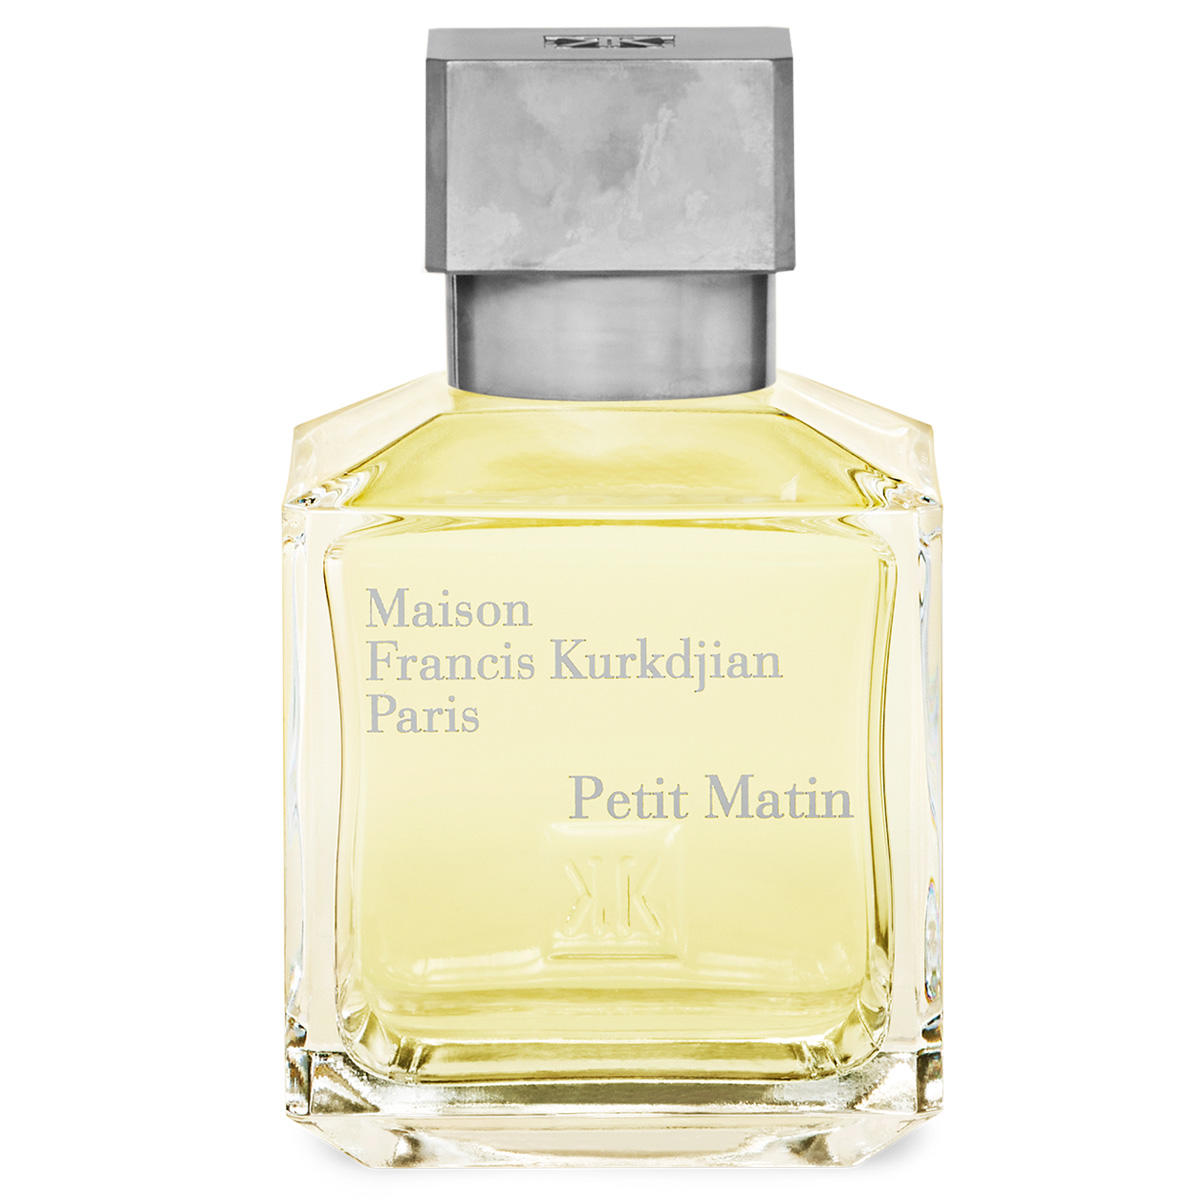 Maison Francis Kurkdjian Paris Petit Matin Eau de Parfum  - 1